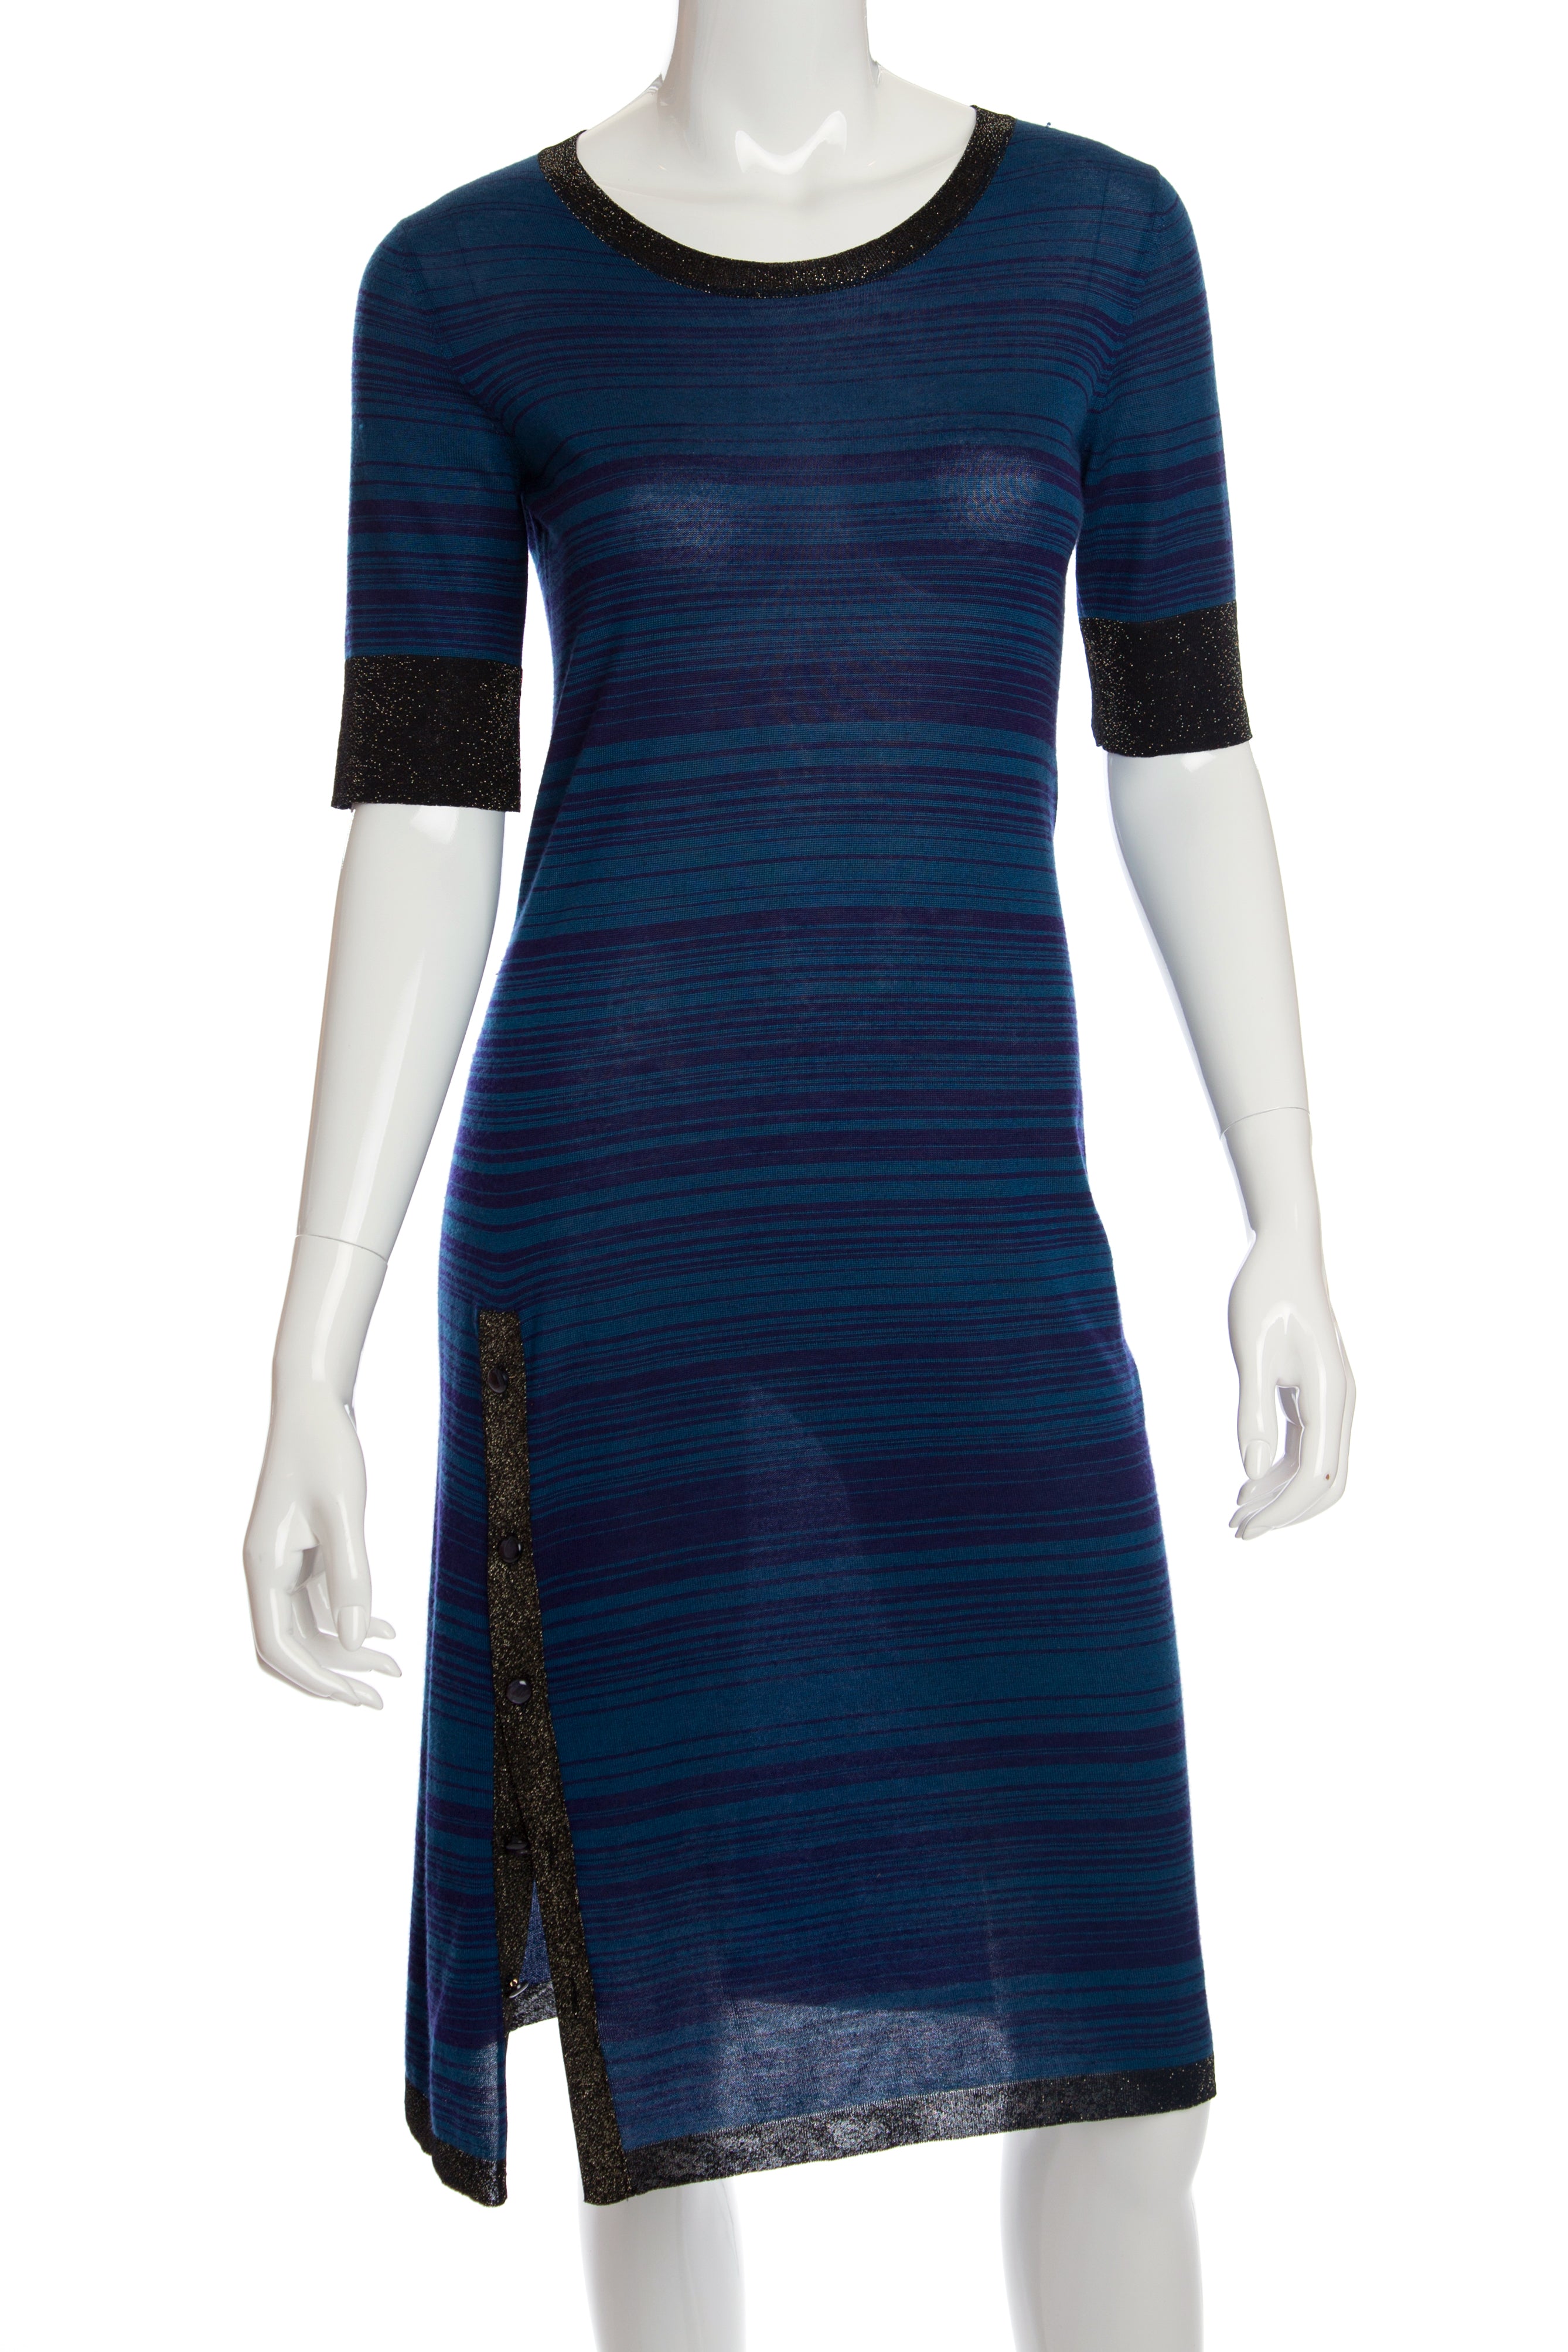 Louis Vuitton - Striped Knit Dress with Metallic Trim